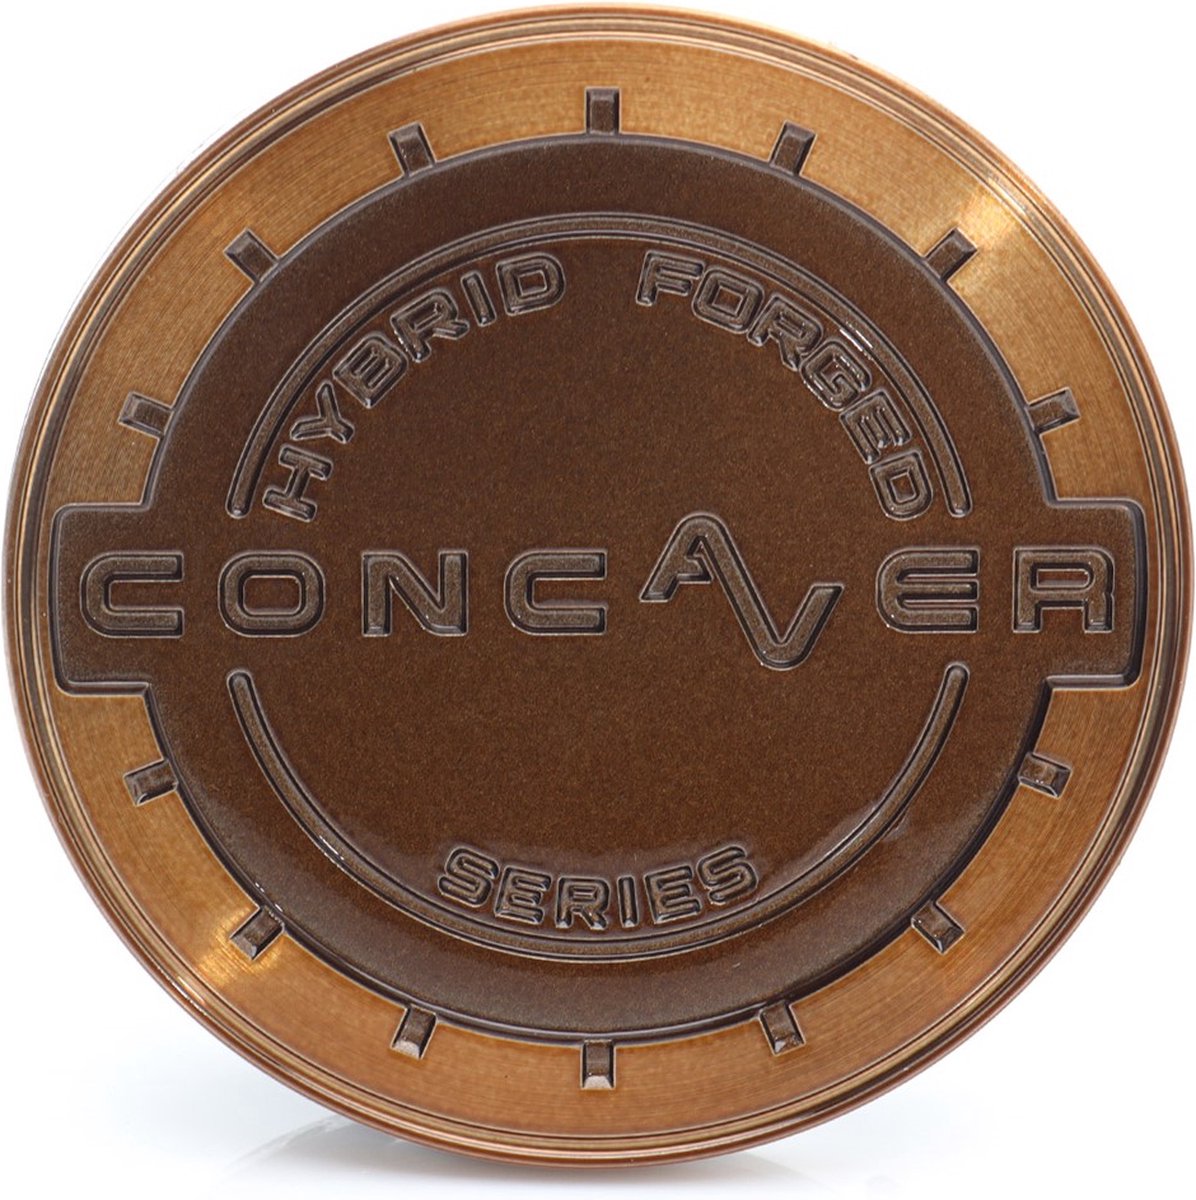 Center cap Concaver wheels CVR brushed bronze